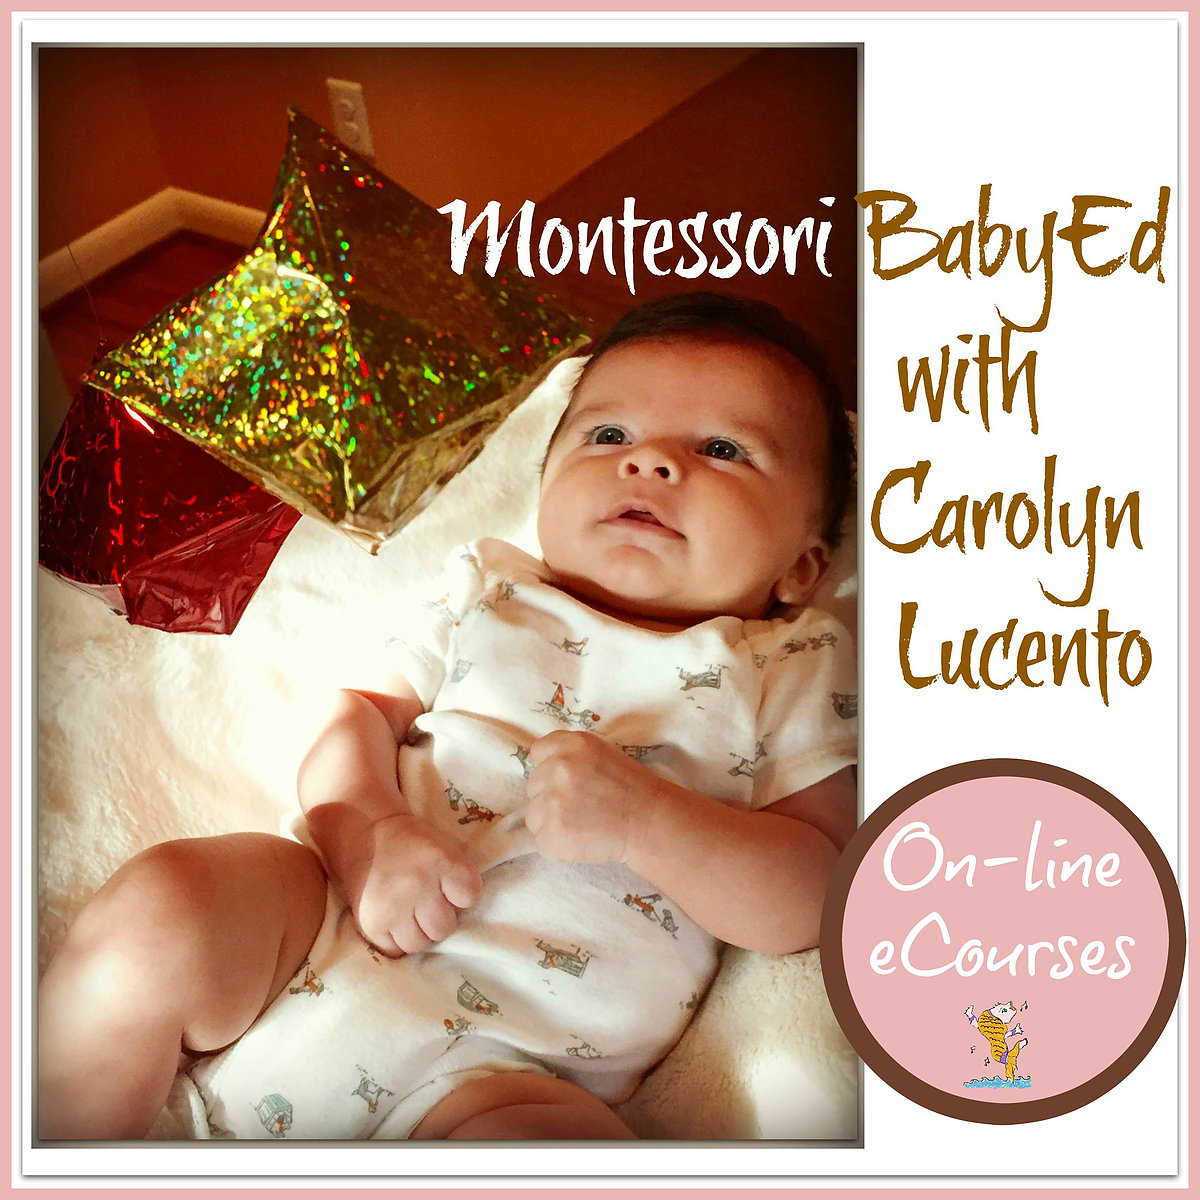 Montessori Baby-Ed eCourse: Musically Montessori "Month by Month"